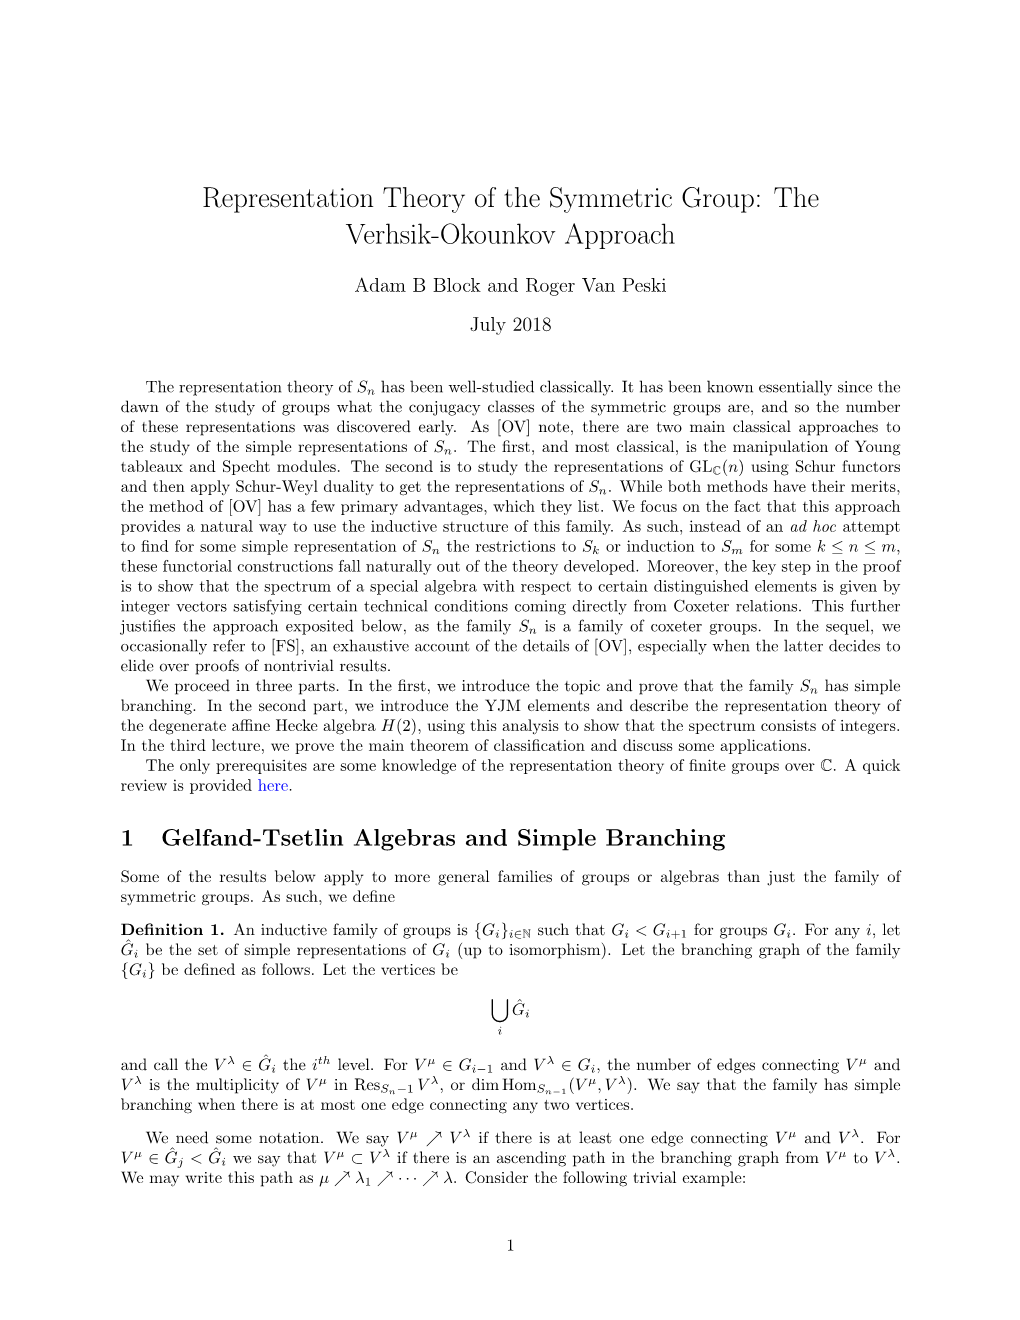 Representation Theory of the Symmetric Group: the Verhsik-Okounkov Approach